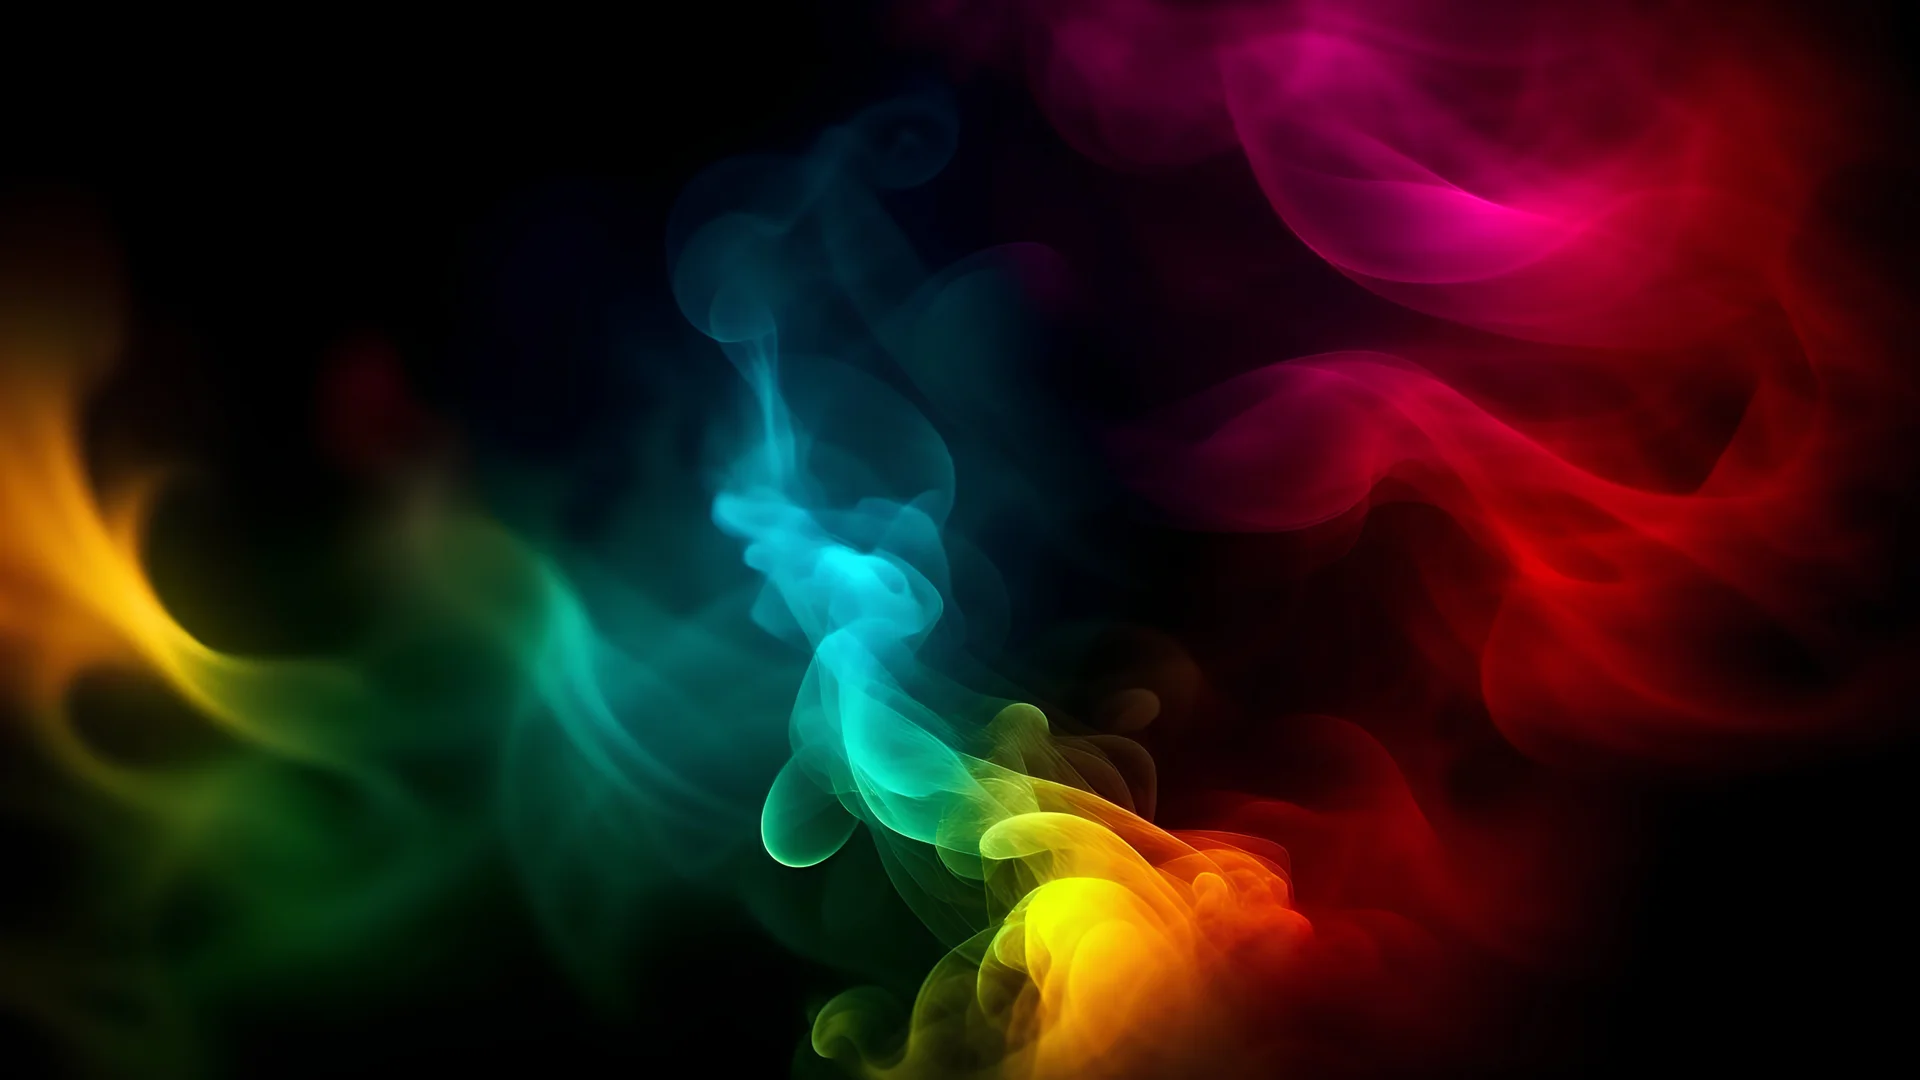 A wallpaper, magic, mystic background, magic fog, smoke, warn colours